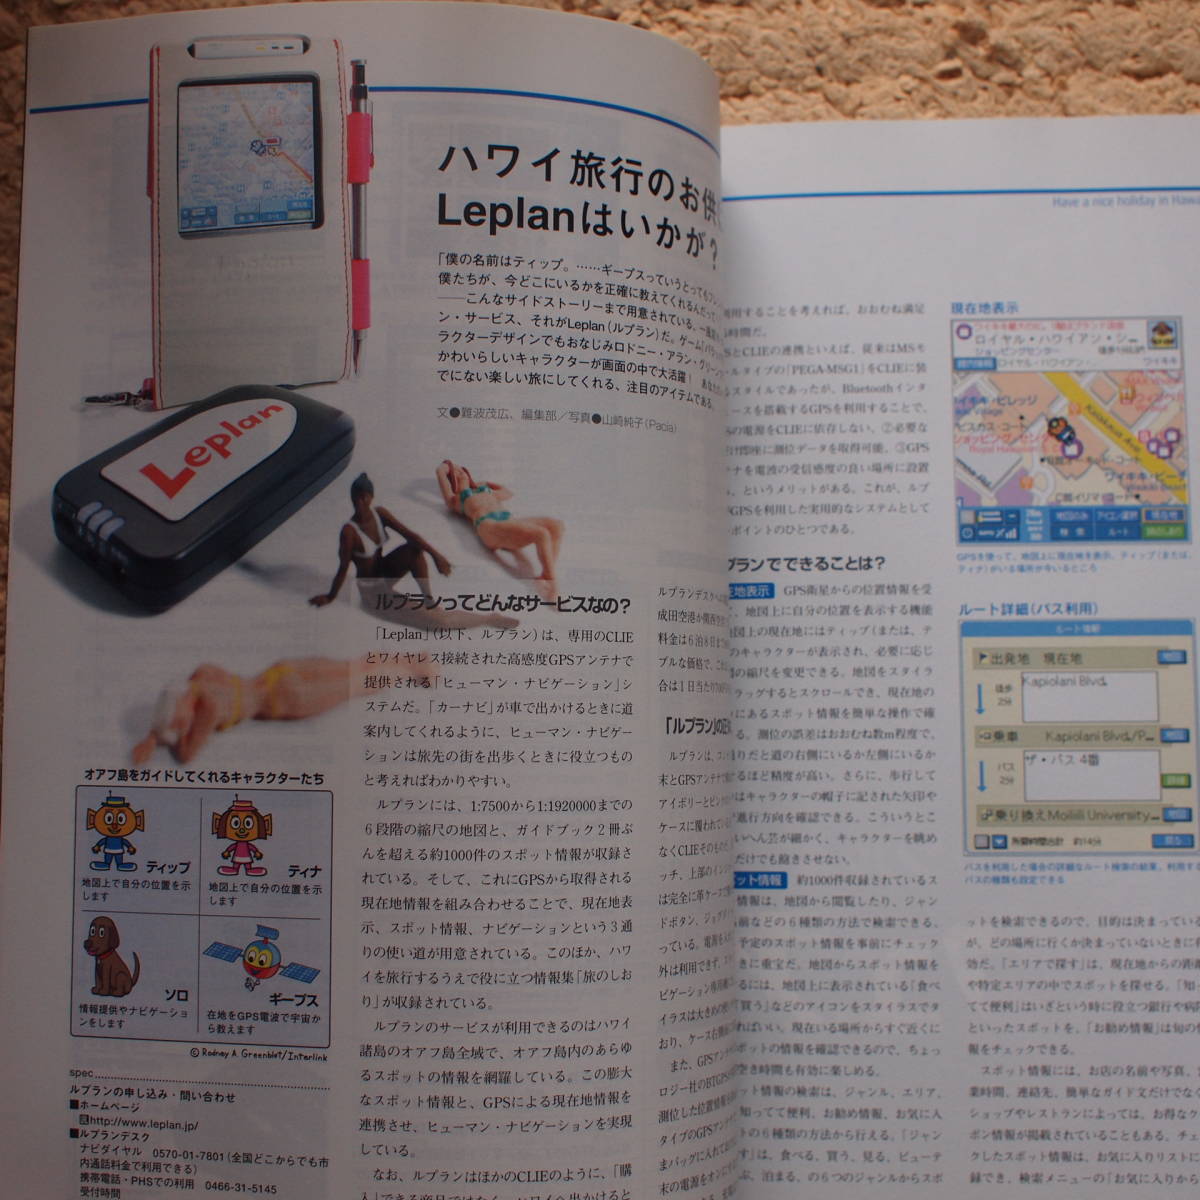 Palm Magazine Vol.21 ( ASCII Mucc ) Zodiac/Leplan/ super * schedule management ./pa-m wear large .2003/ stylish & convenience goods 50/CD-ROM attaching 